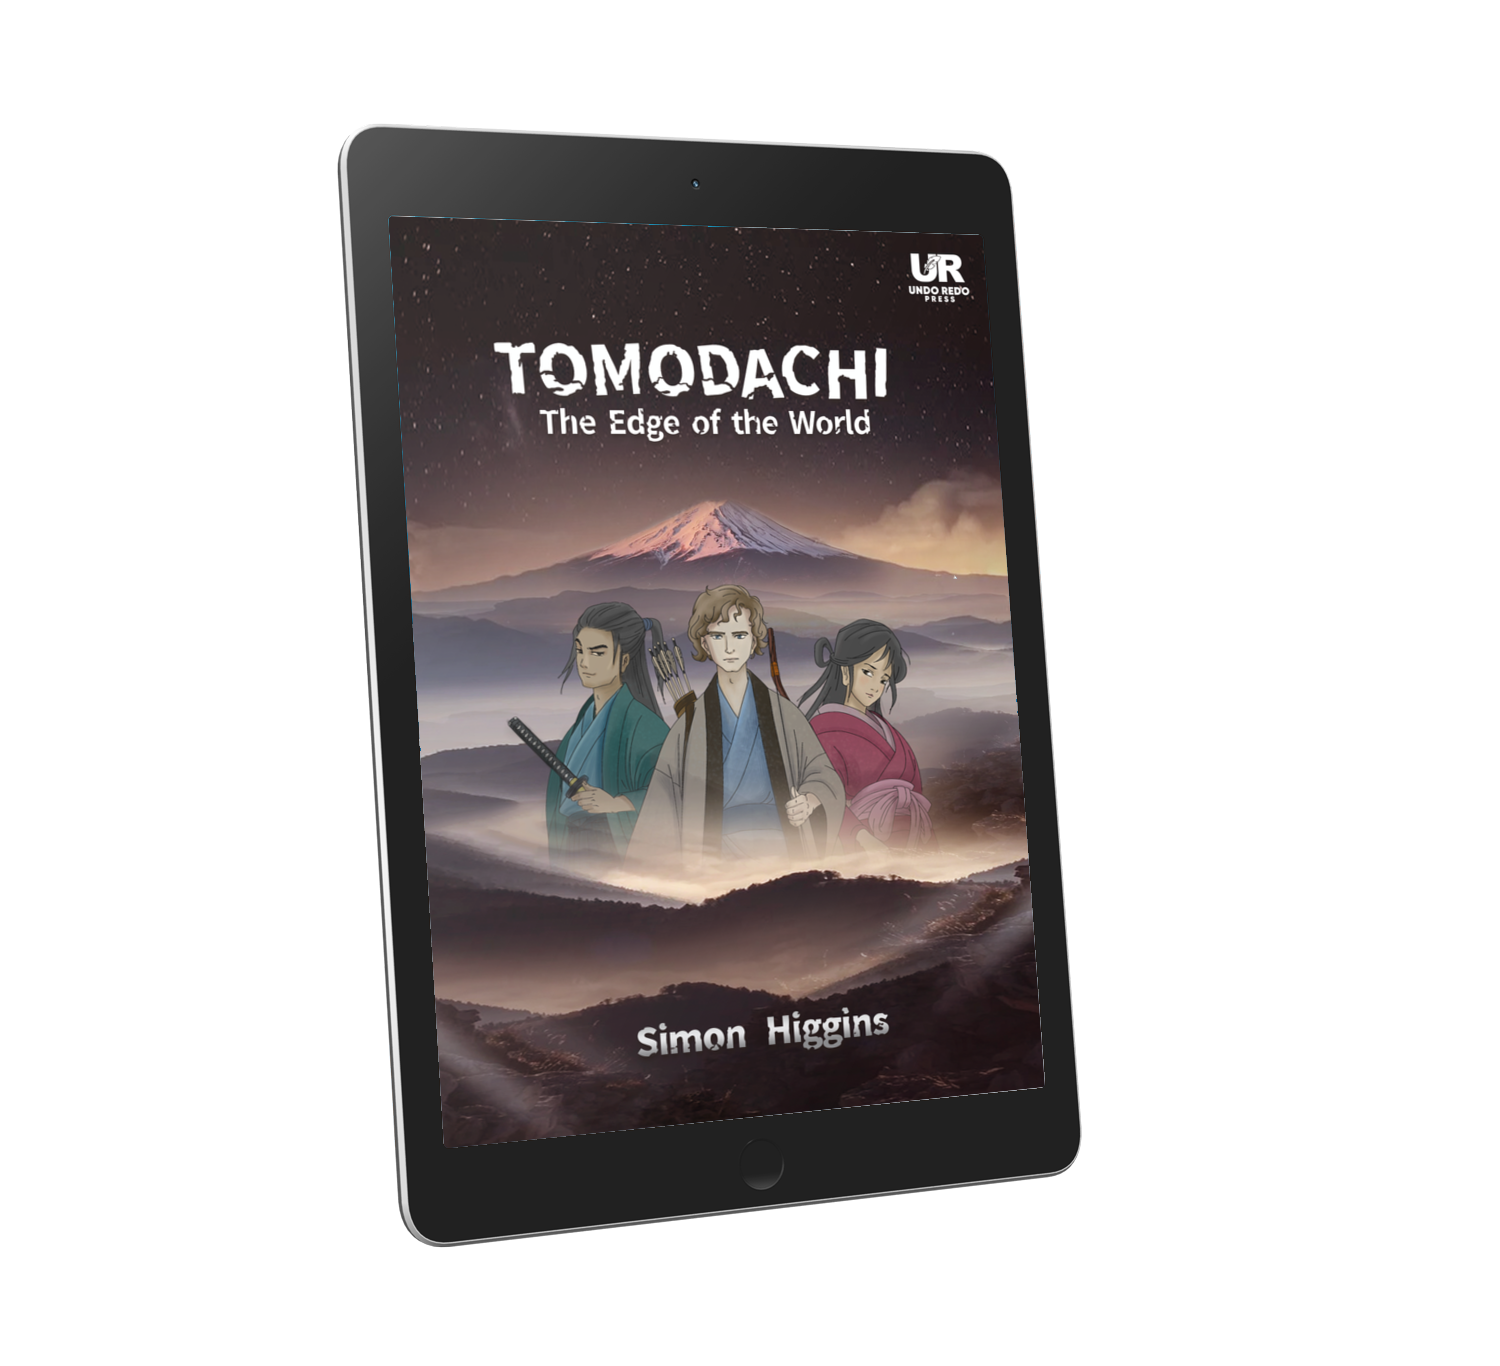 Tomodachi Game: The Complete Season [Blu-ray] : Various, Various: Movies &  TV 